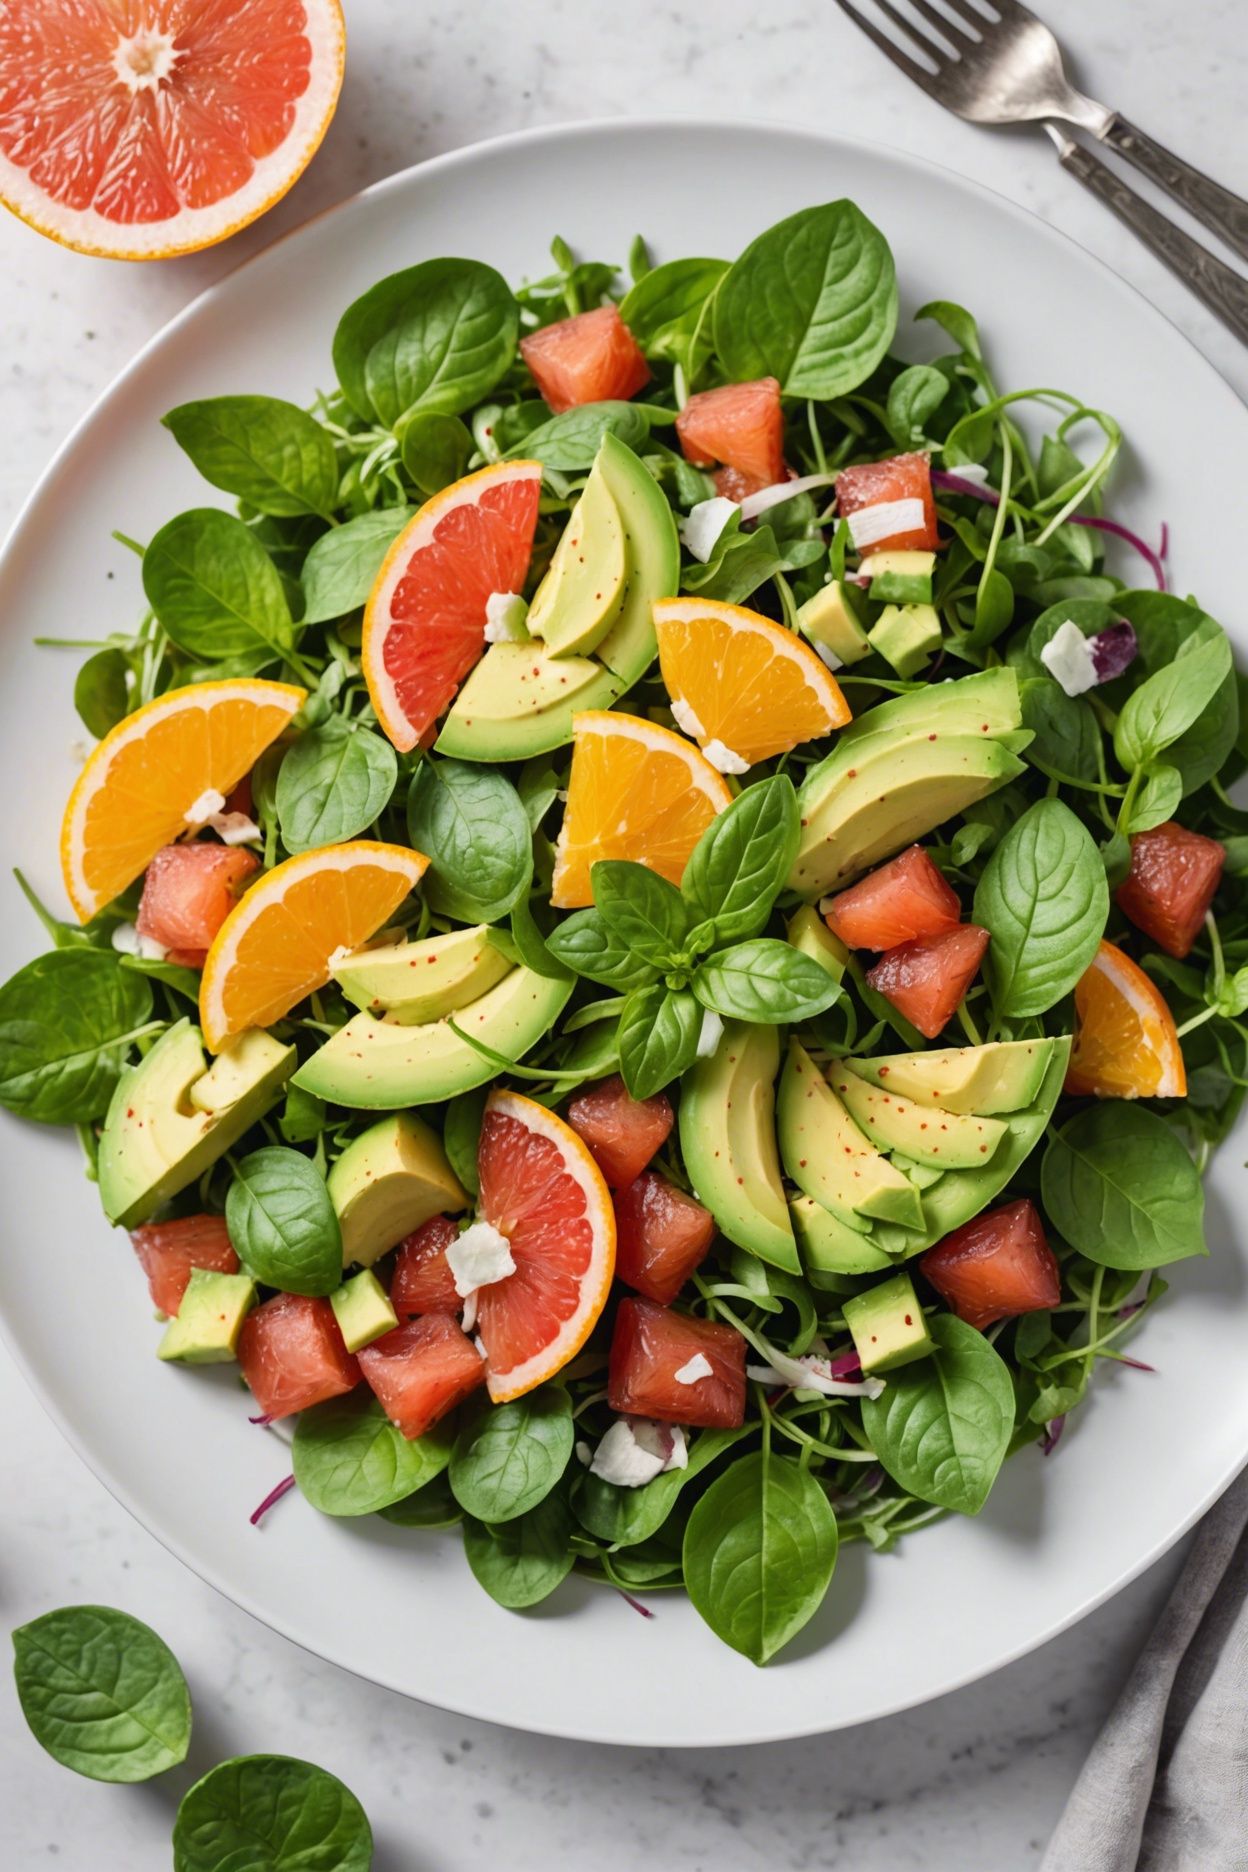 Refreshing Creamy Avocado And Citrus Salad Recipe Healthy And Vibrant